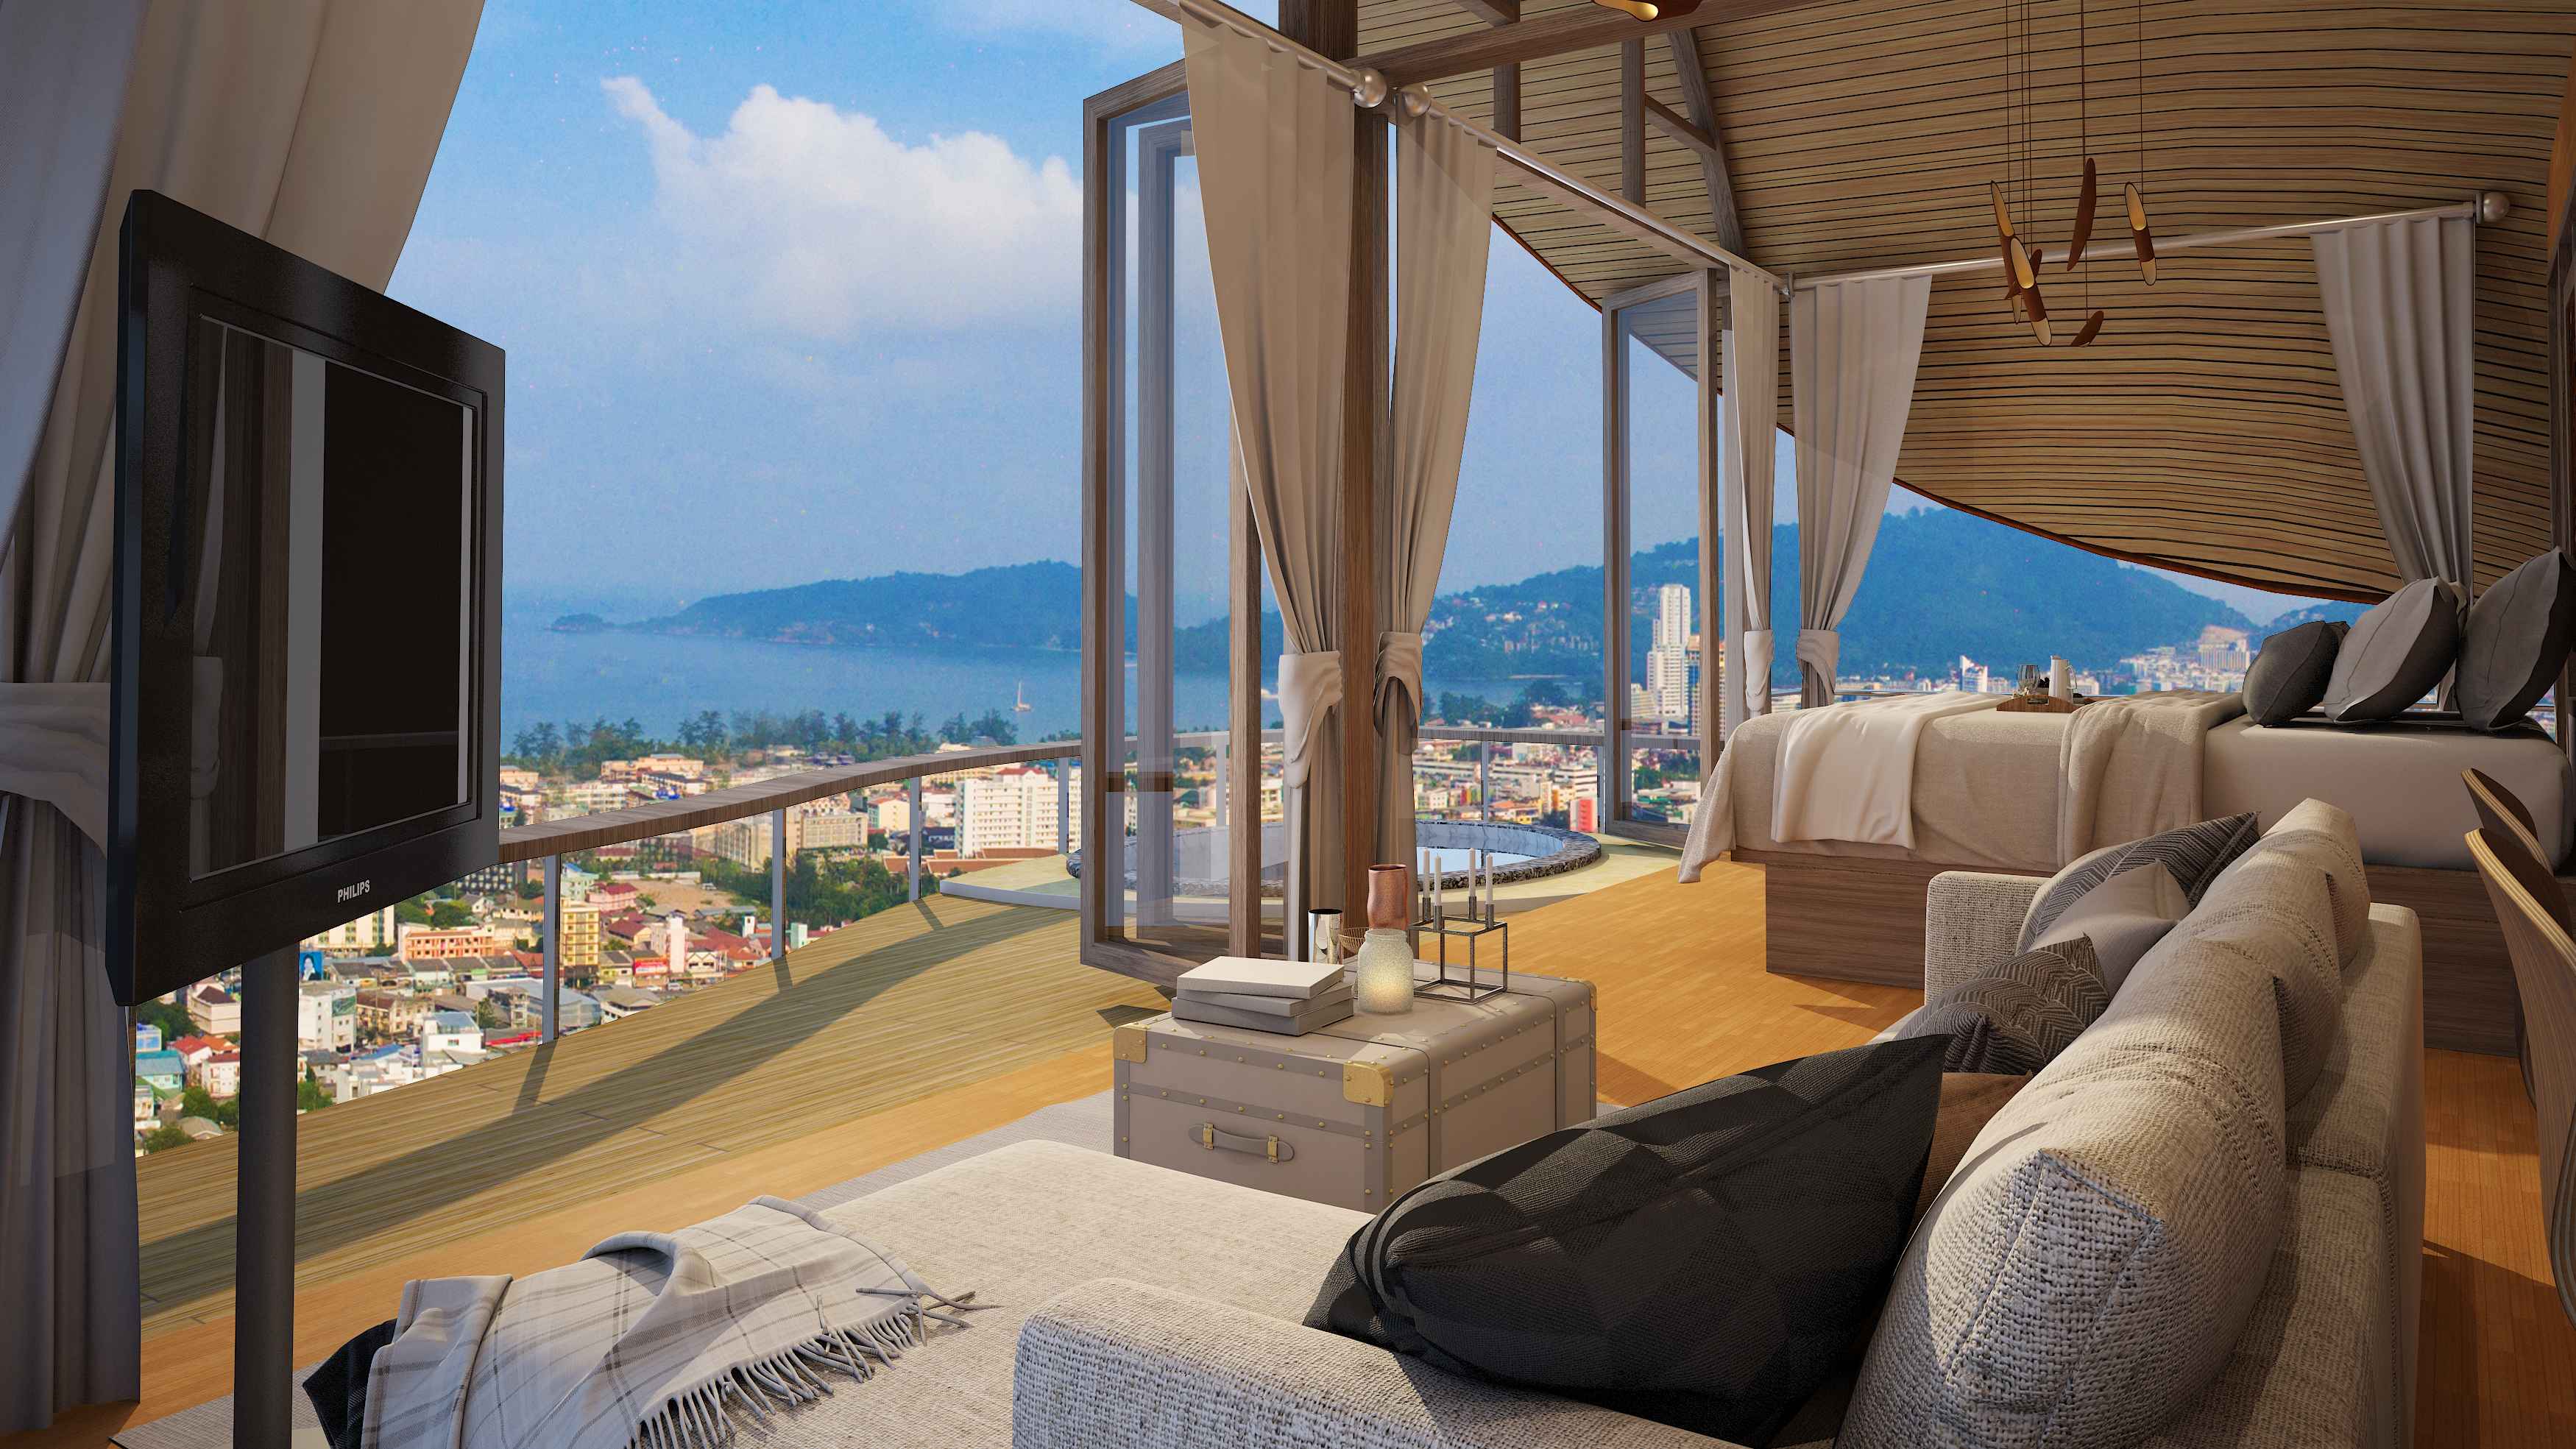 1 Bedroom Luxury Birdnest Seaview